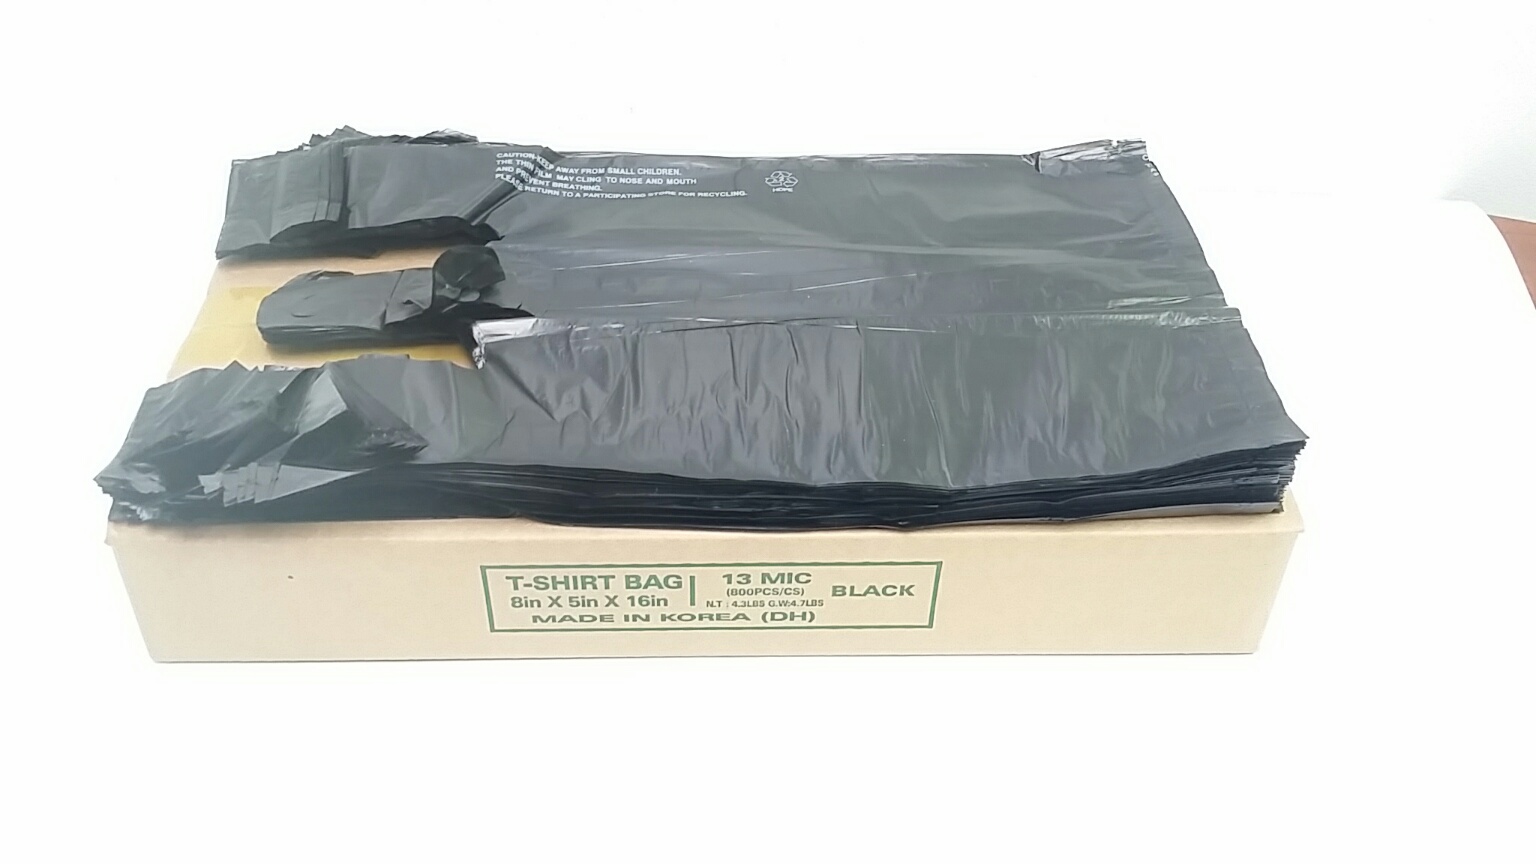 1/10 SMALL BLACK PLASTIC BAG 13 MIC 8 in x 5 in x 16 in 800pcs/cs